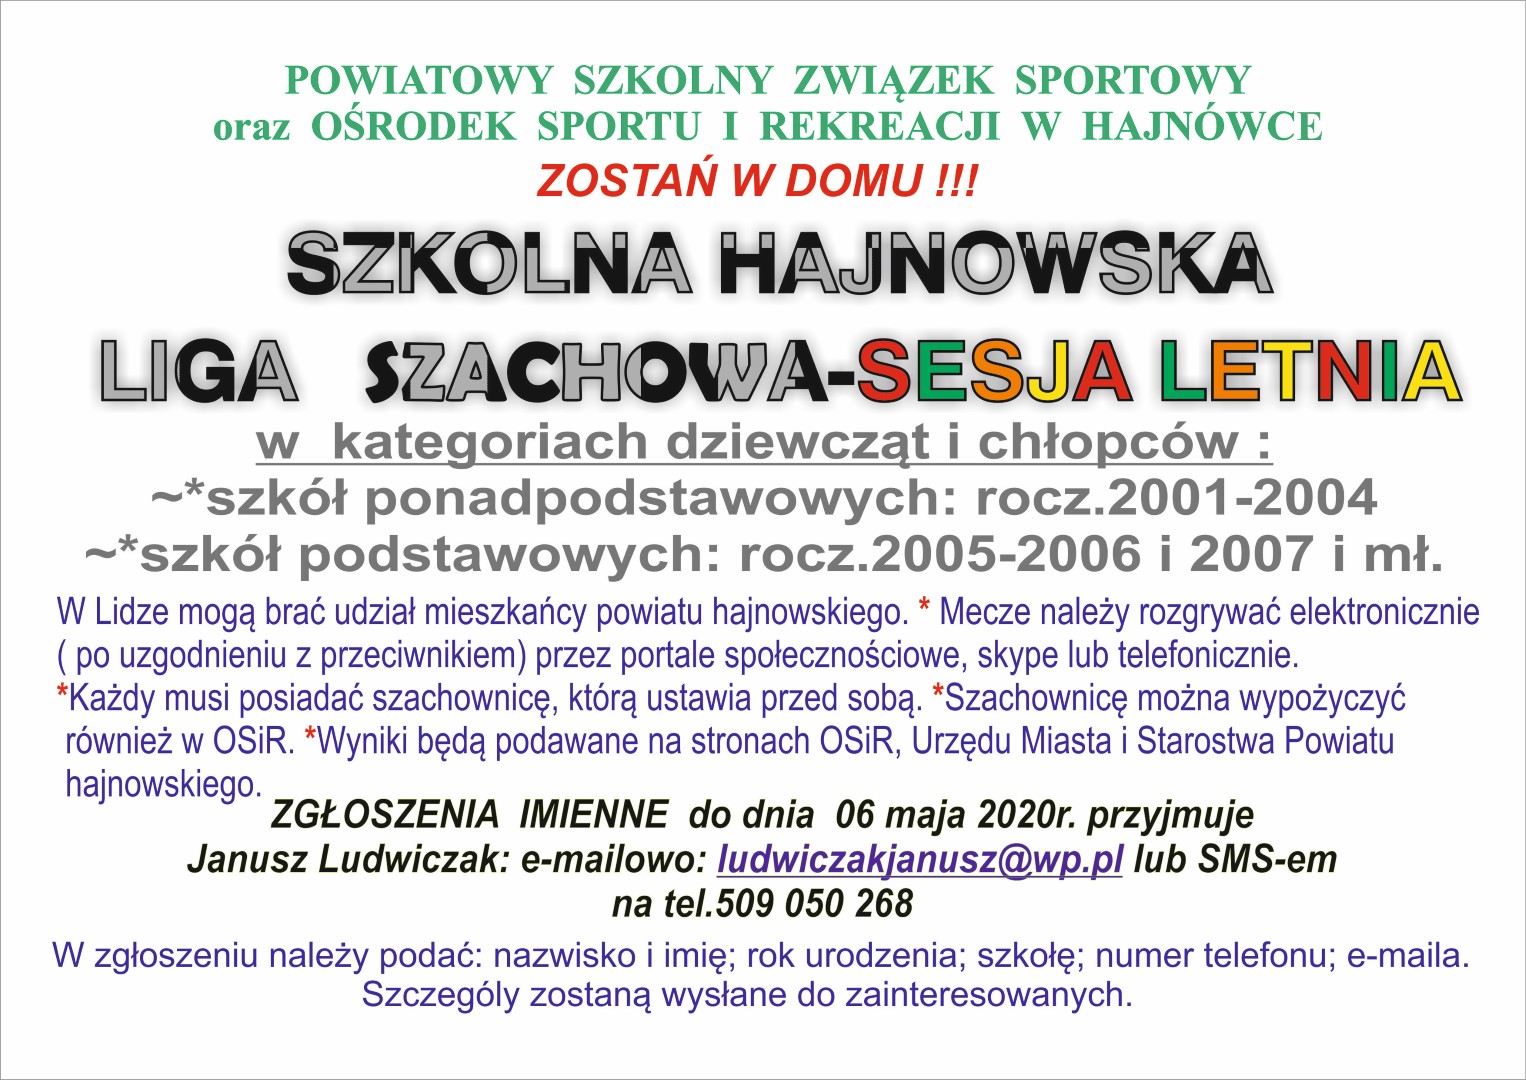 Hajnowska Liga Szachowa plakat